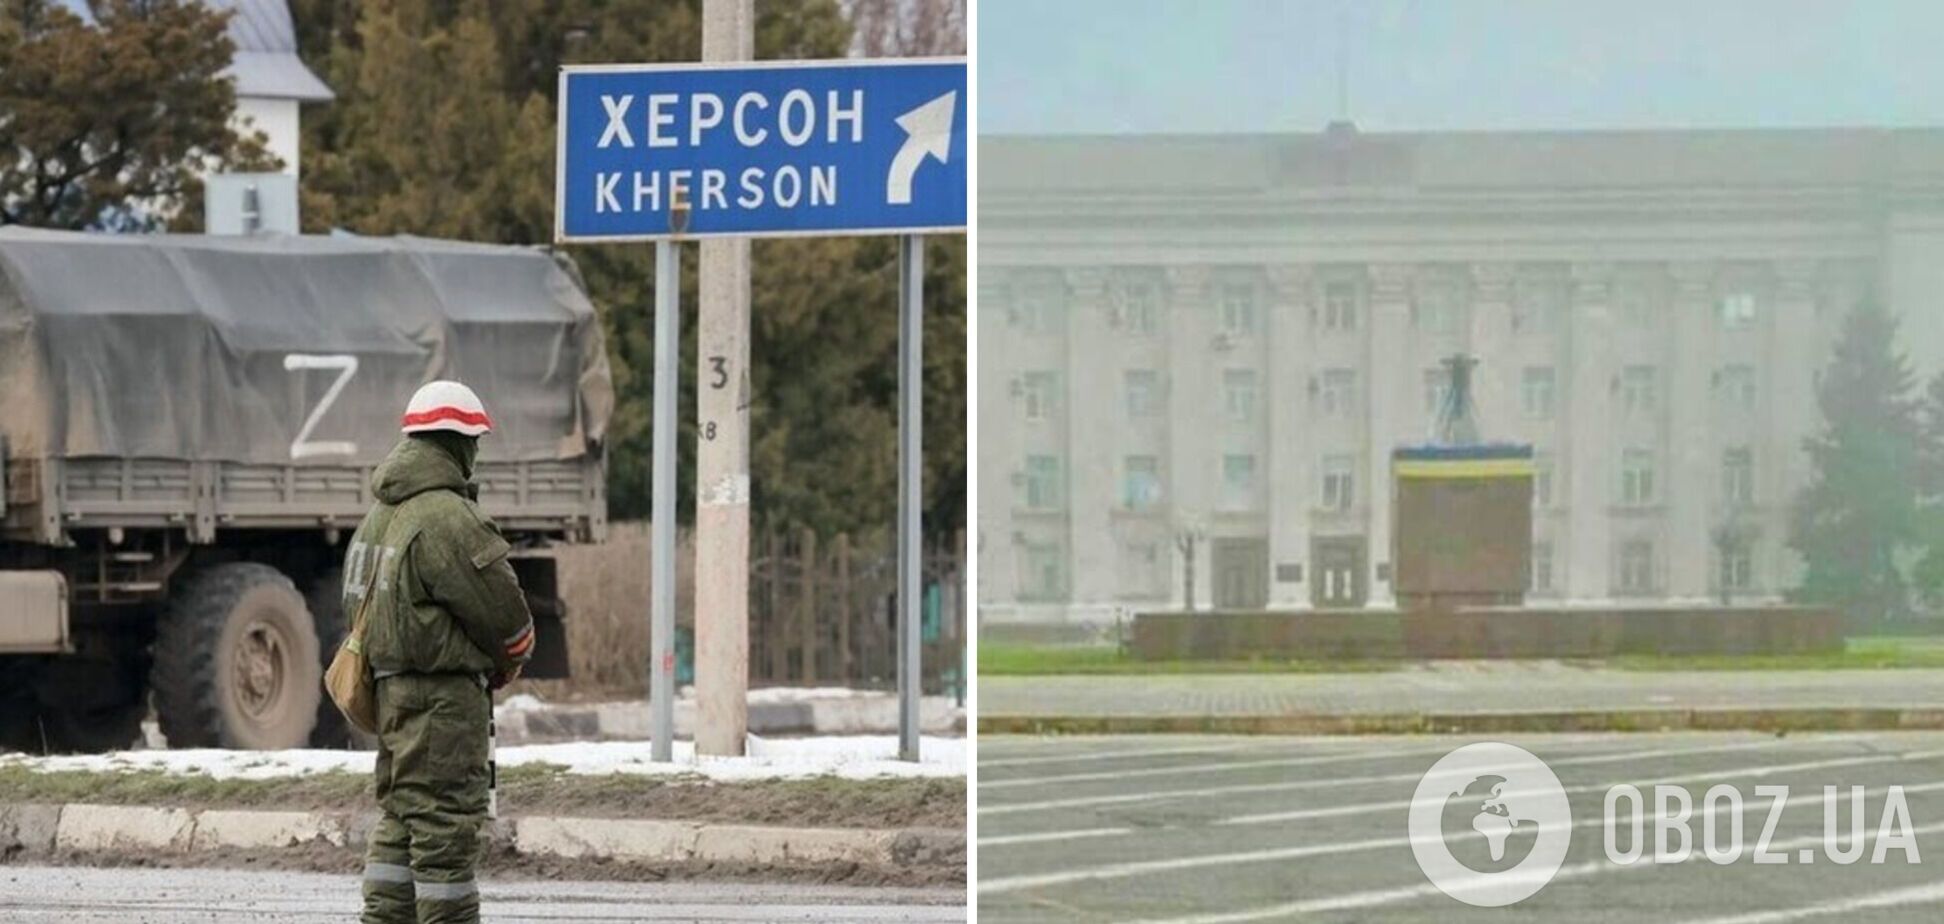 В сети показали фото украинского флага в Херсоне: какая сейчас ситуация в городе. Фото